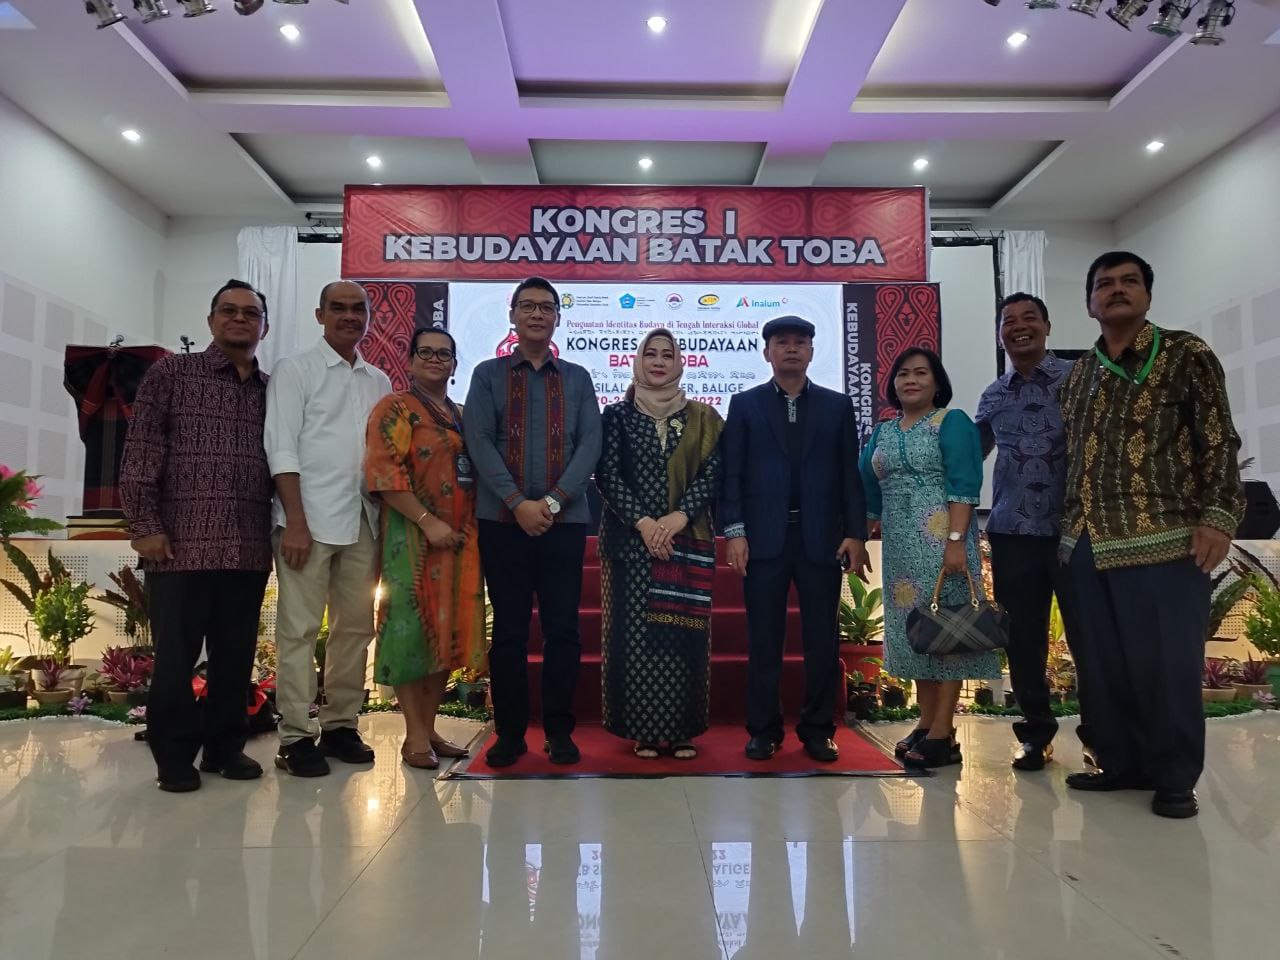 Kongres I Kebudayaan Batak Toba di Hadiri oleh Dekan dan Wakil Dekan III FIB